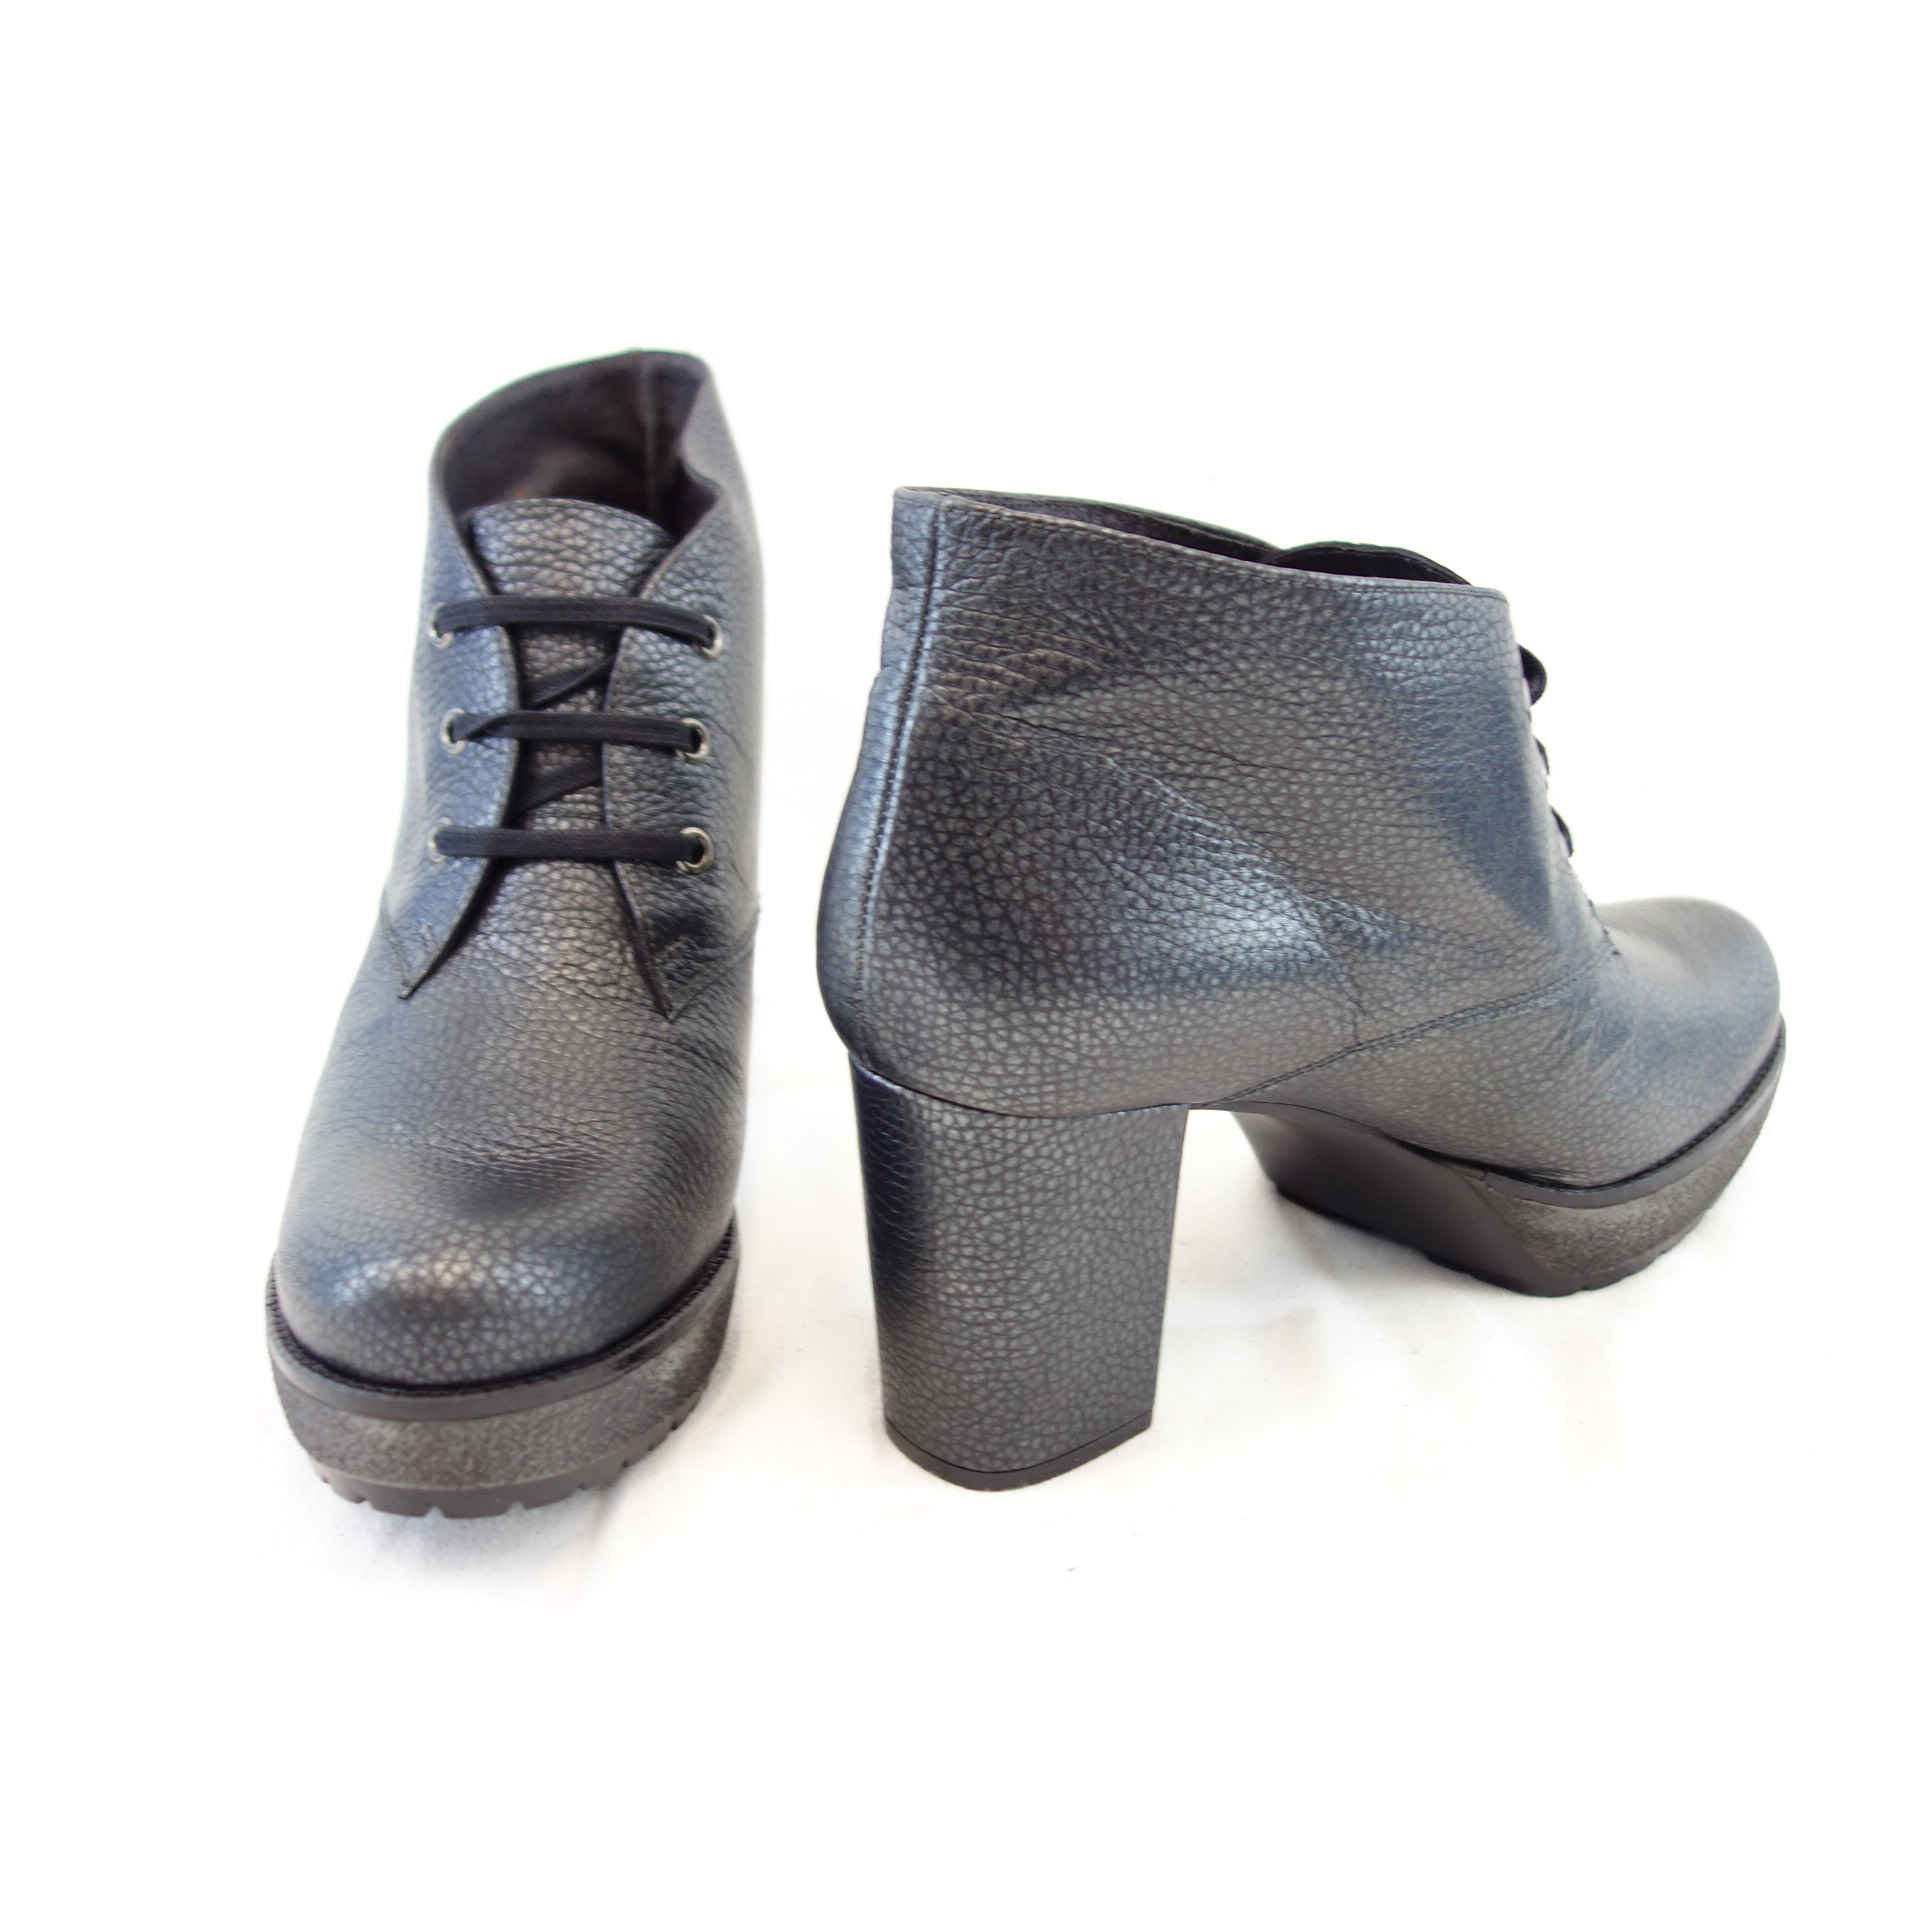 GADEA Damen Schuhe Ankle Boots Schwarz Stiefeletten Stiefel Leder 41 Np 159 Neu